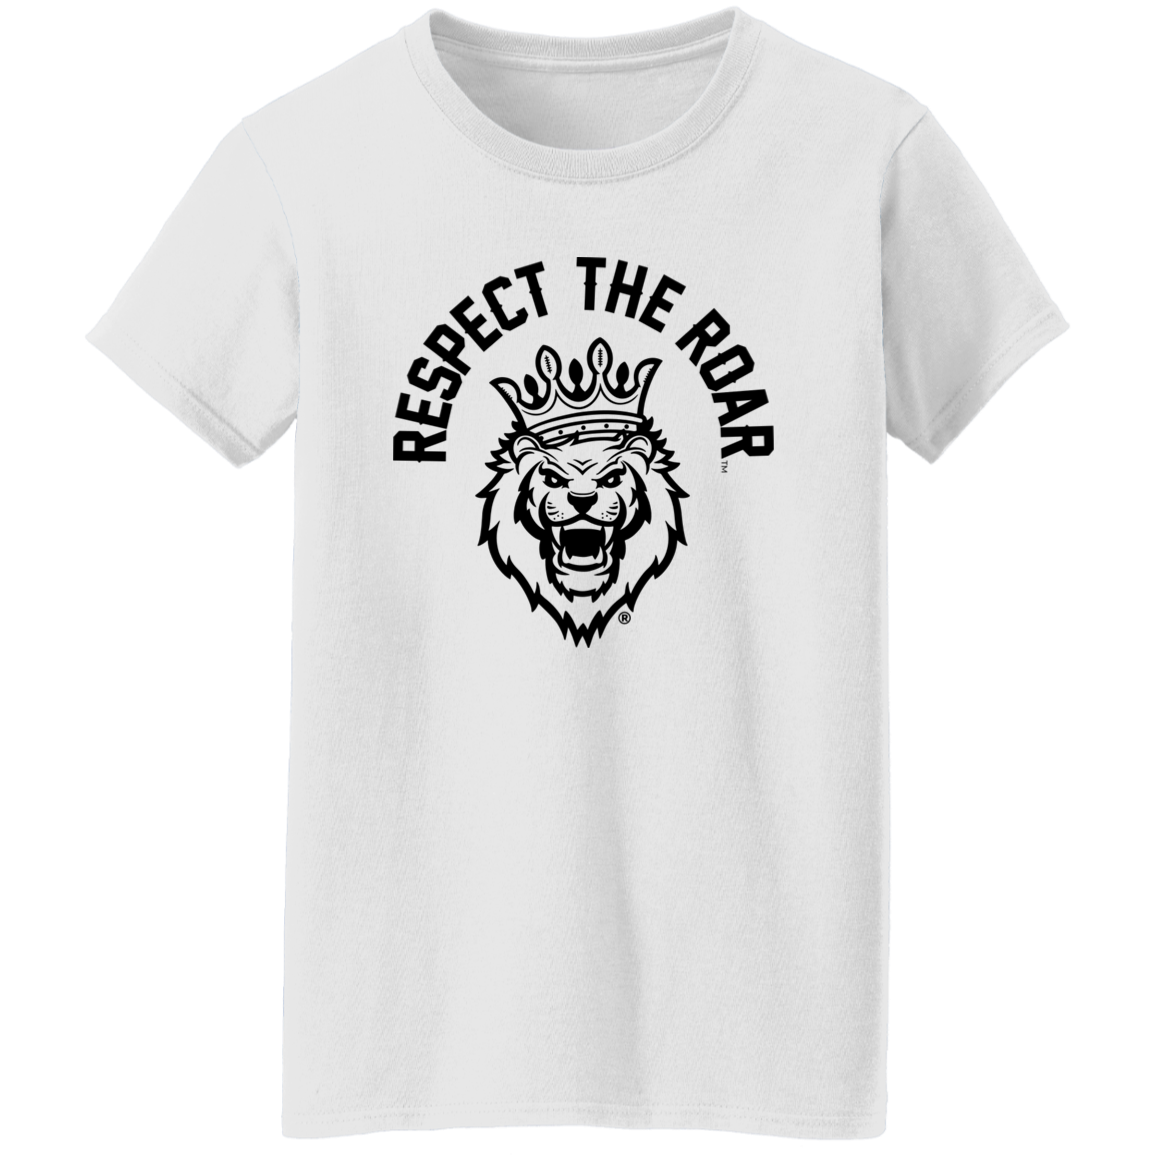 Respect The Roar® Ladies' T-Shirt